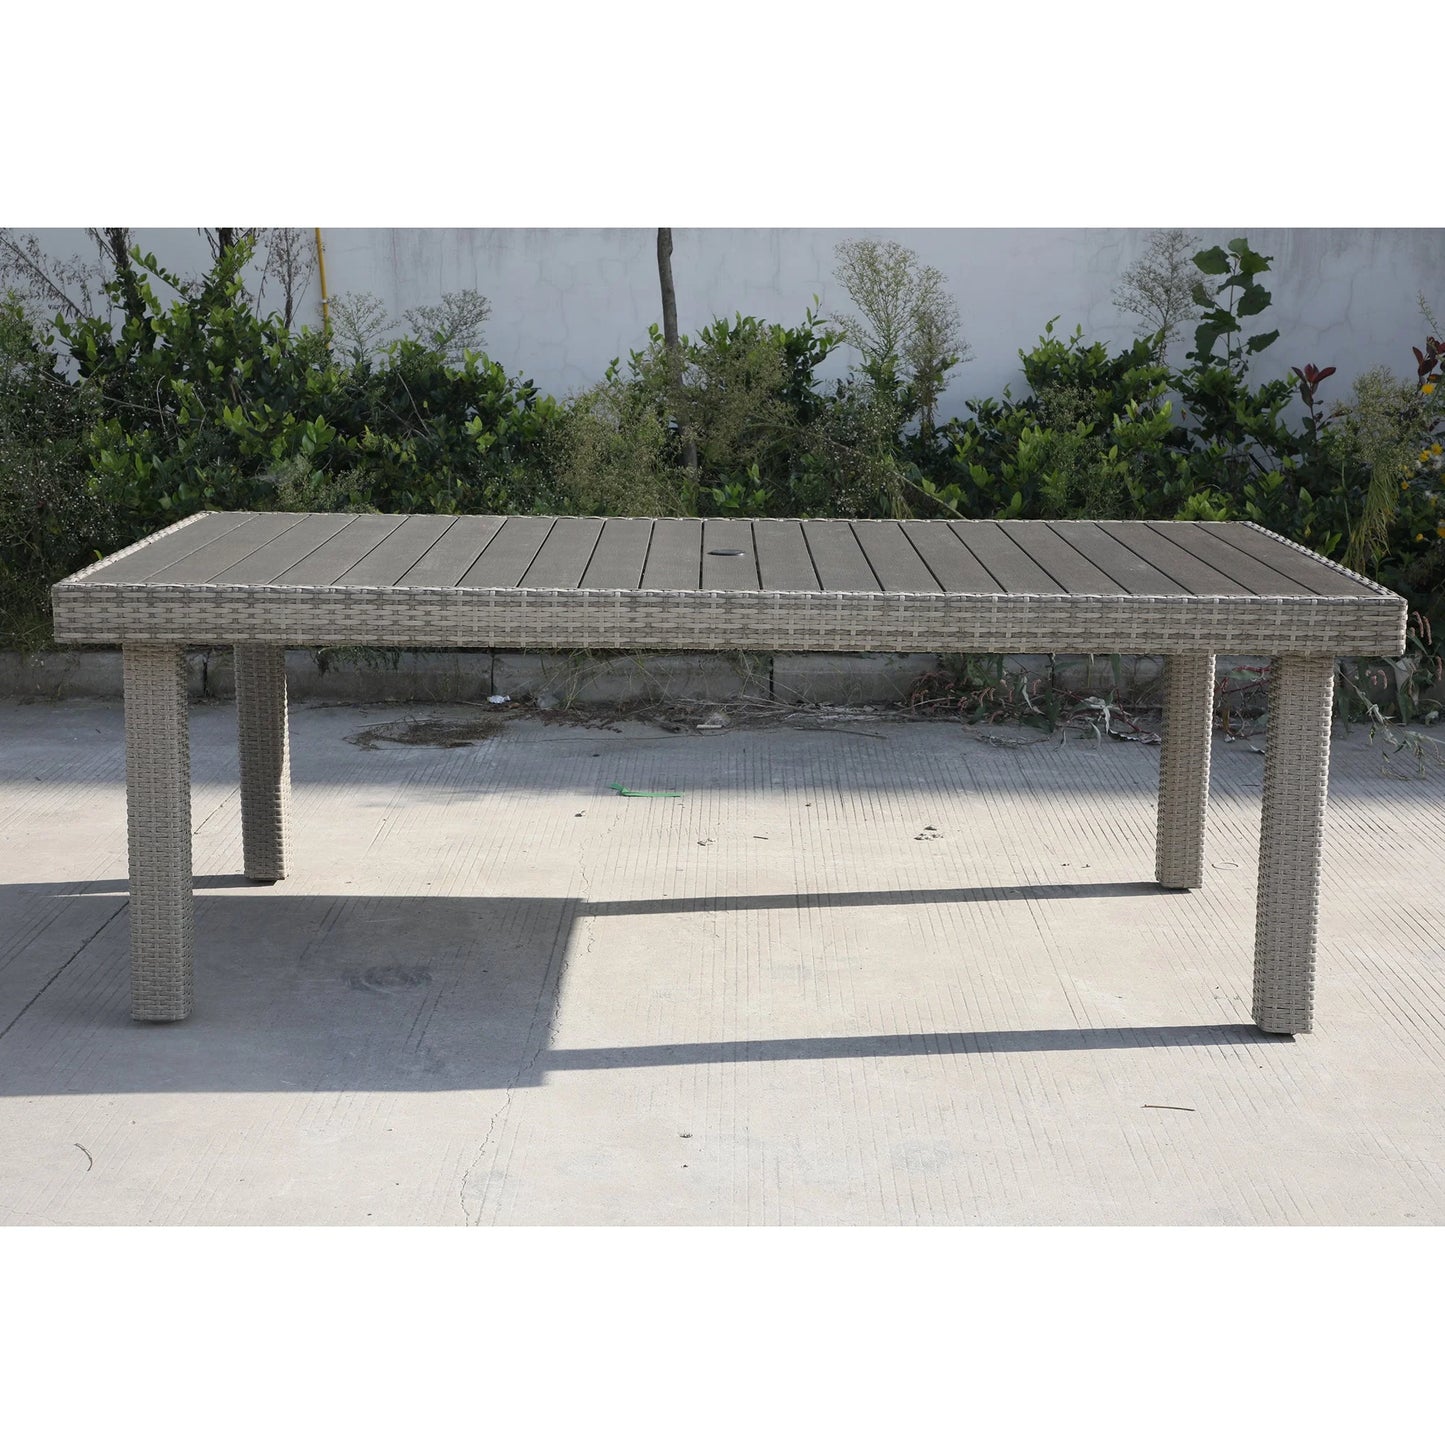 Zena 9 Pc Outdoor Dining Table Set - Gray/Navy